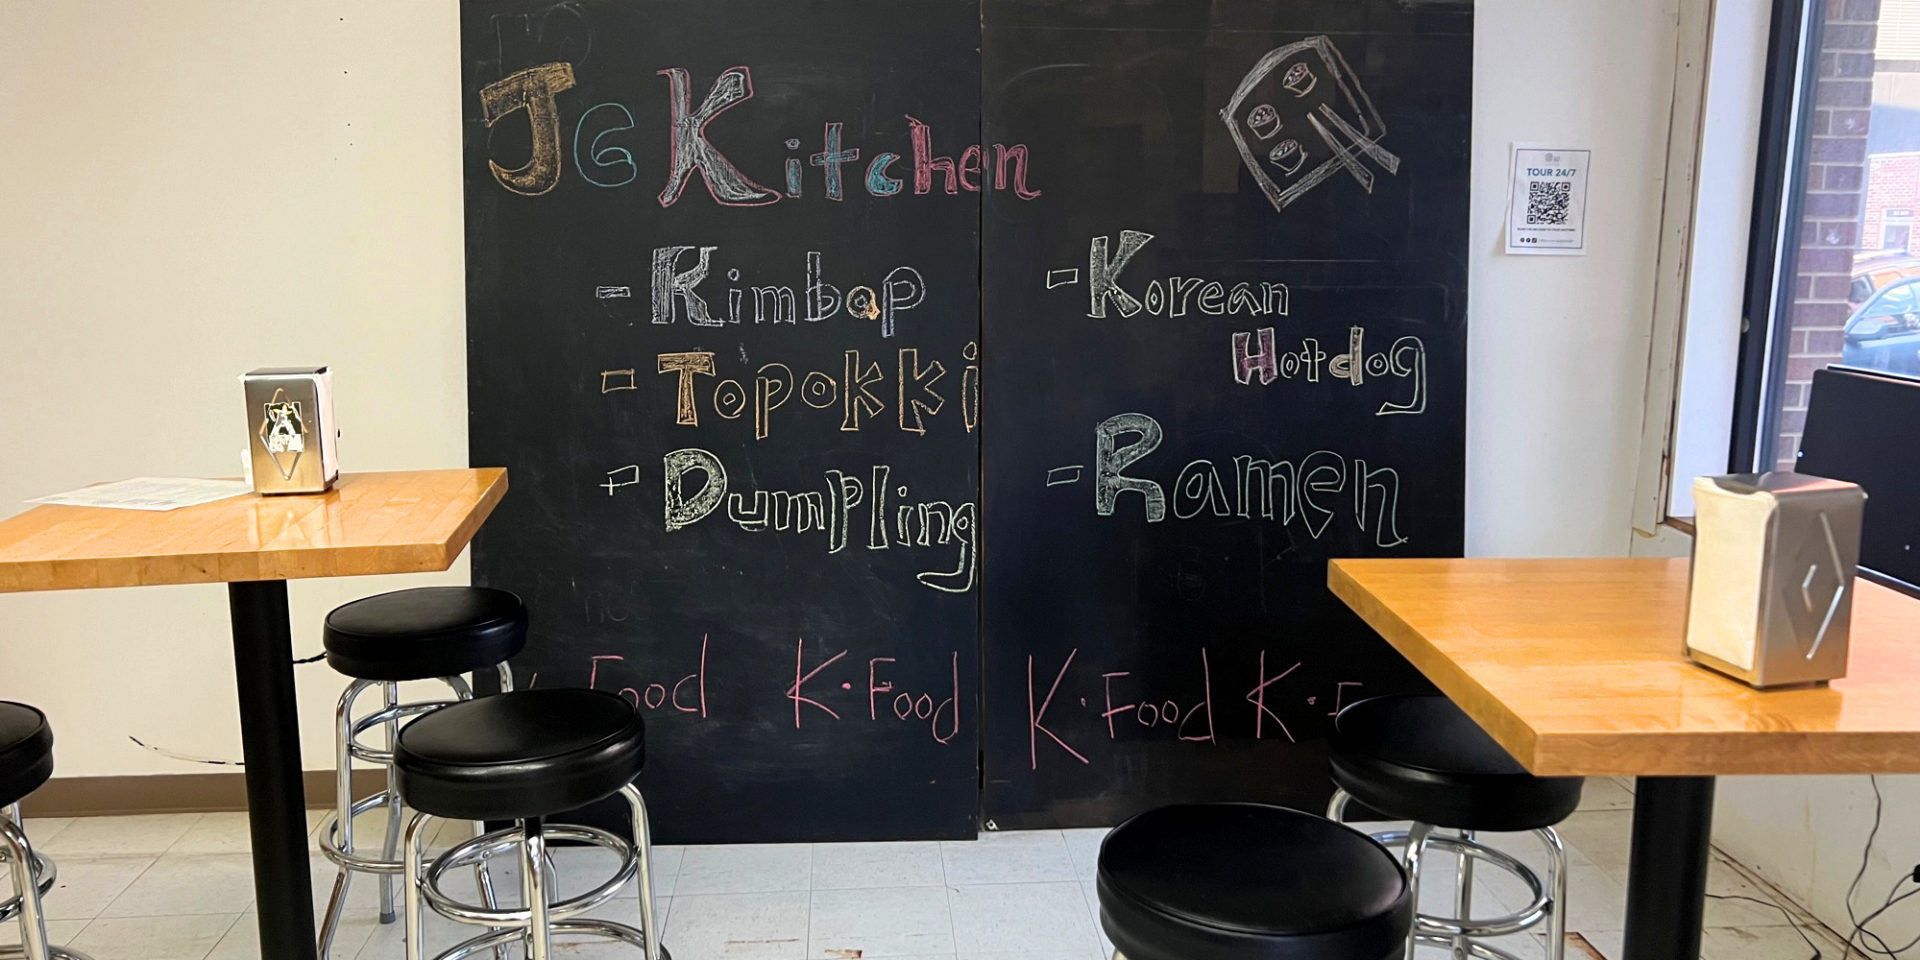 The interior of J6 Kitchen has a chalkboard wall reading "kimbap, topokki, dumpling, Korean hot dog, and ramen" advertising K-food.